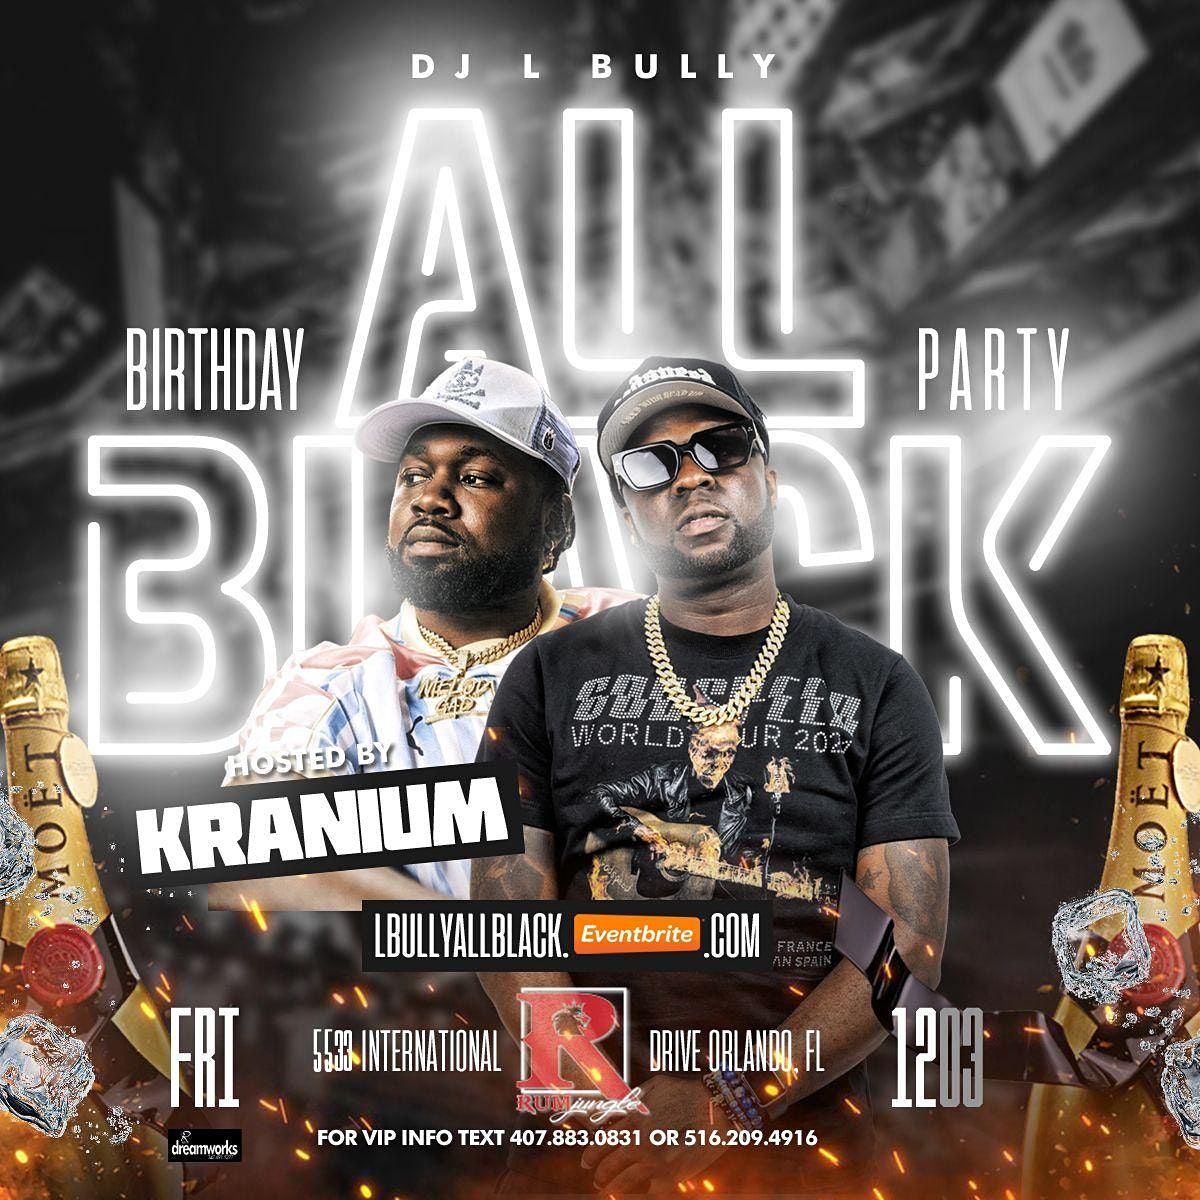 DJ L BULLY ALL BLACK AFFAIR